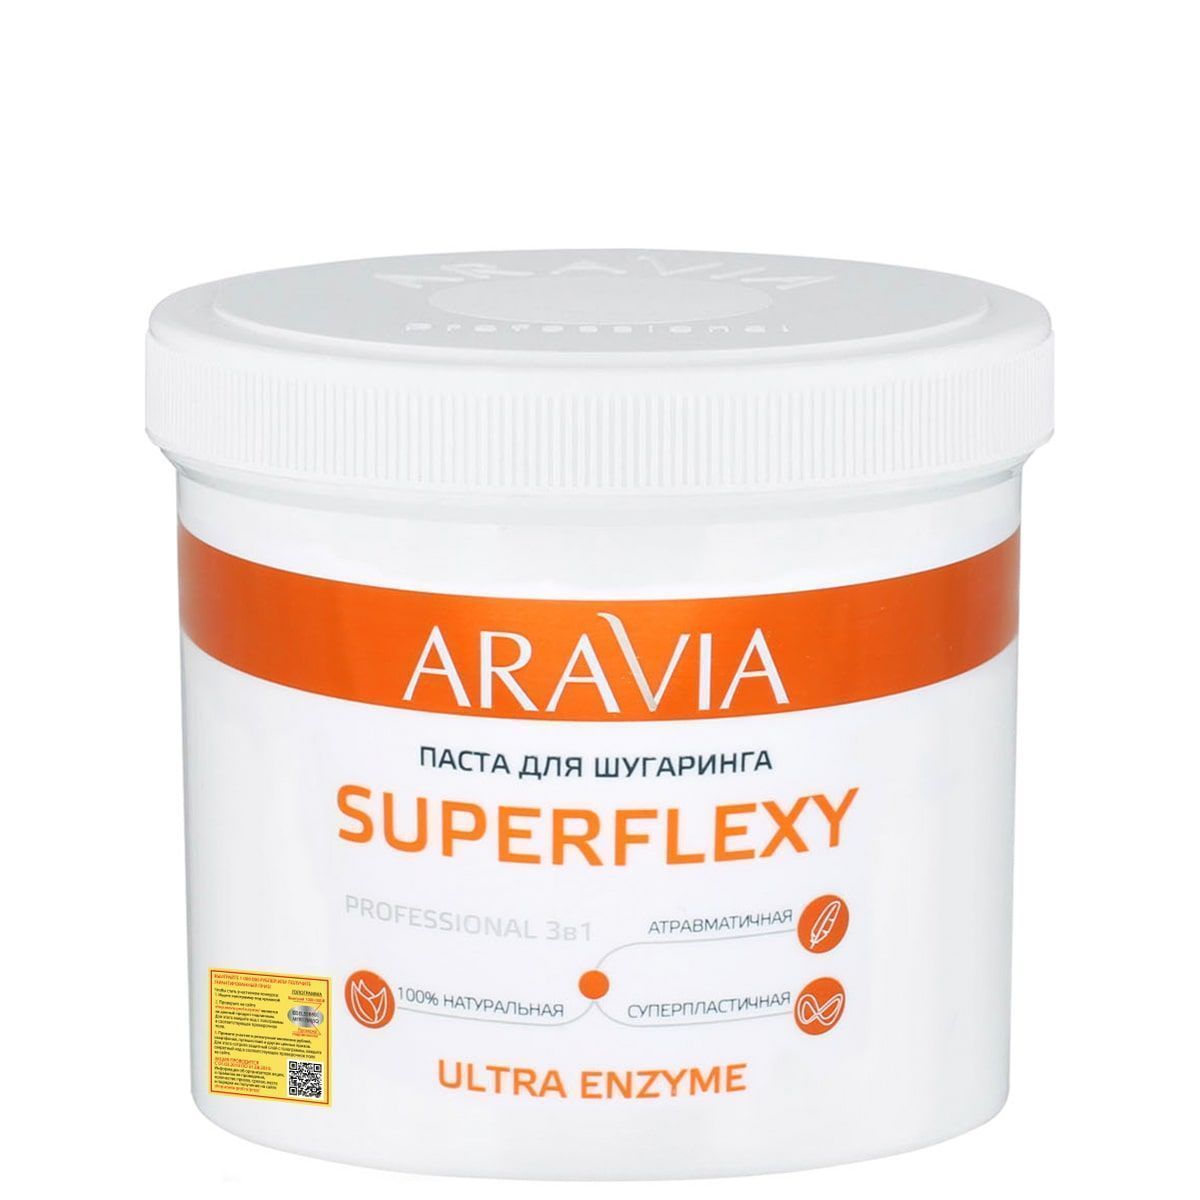 ARAVIA Prof Сахарная паста SUPERFLEXY Ultra Enzyme, 750 гр против вросших волос.